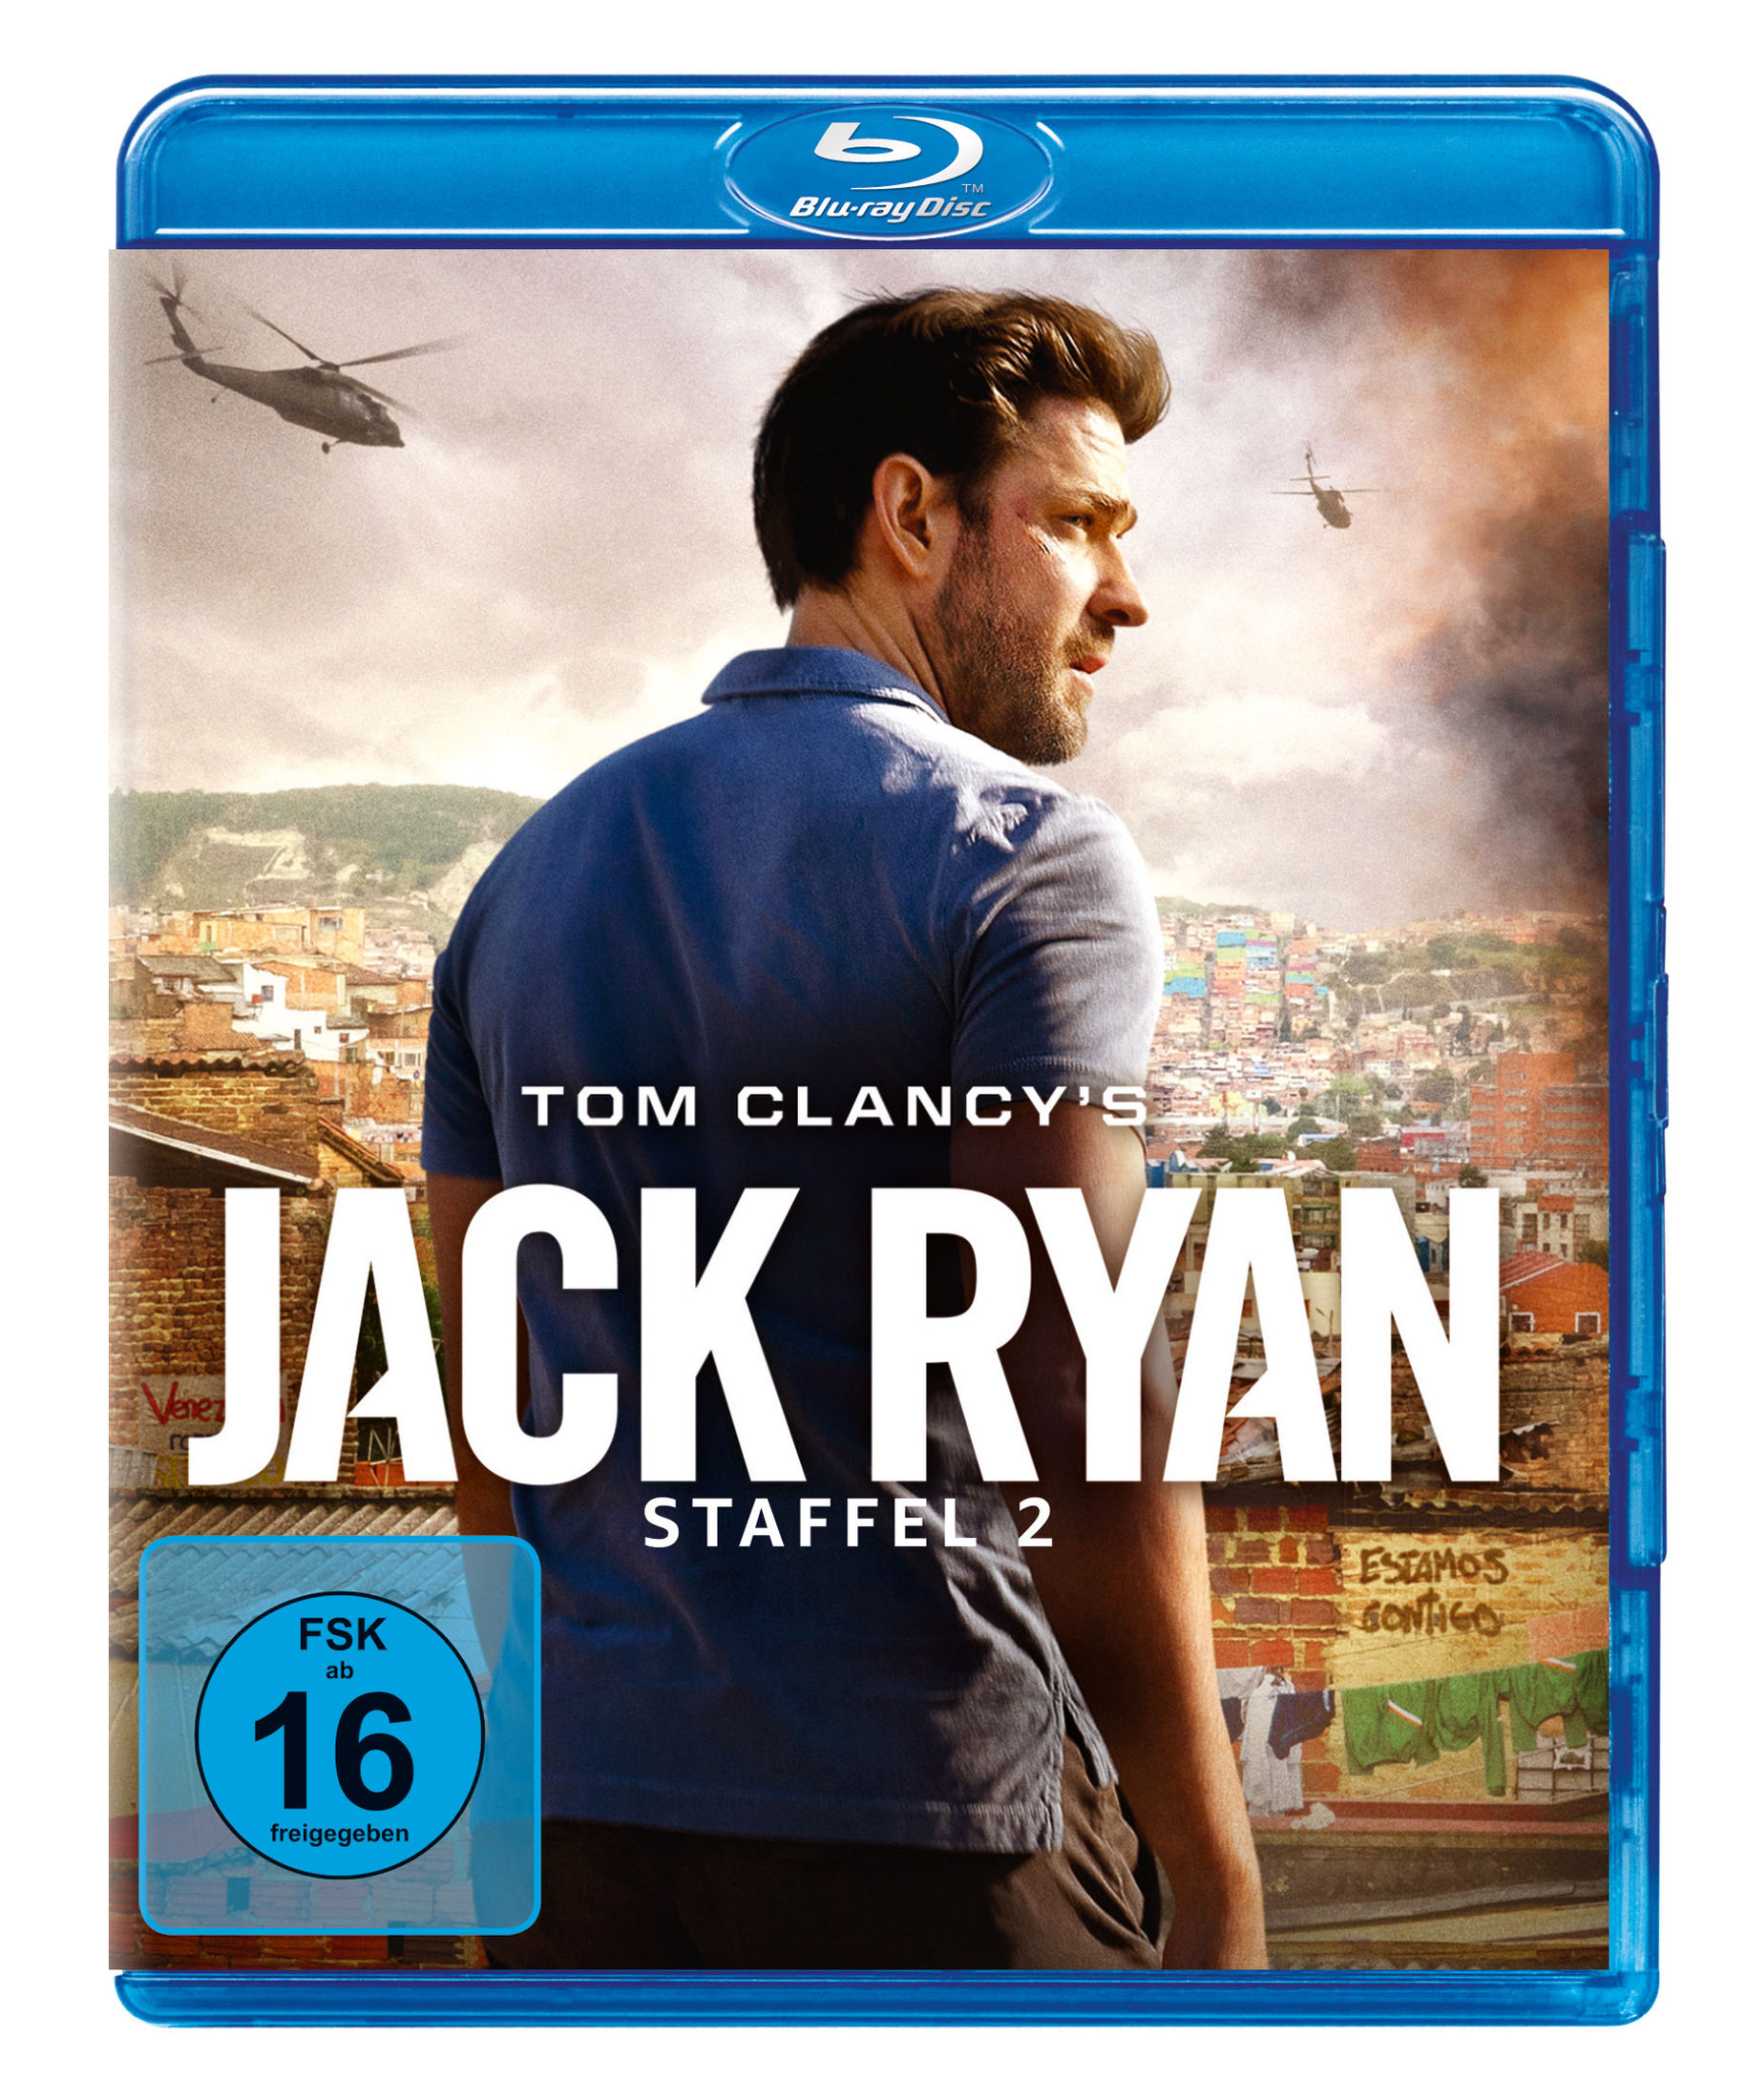 Tom Clancy's Jack Ryan - Staffel 2 Blu-ray bei Weltbild.de kaufen